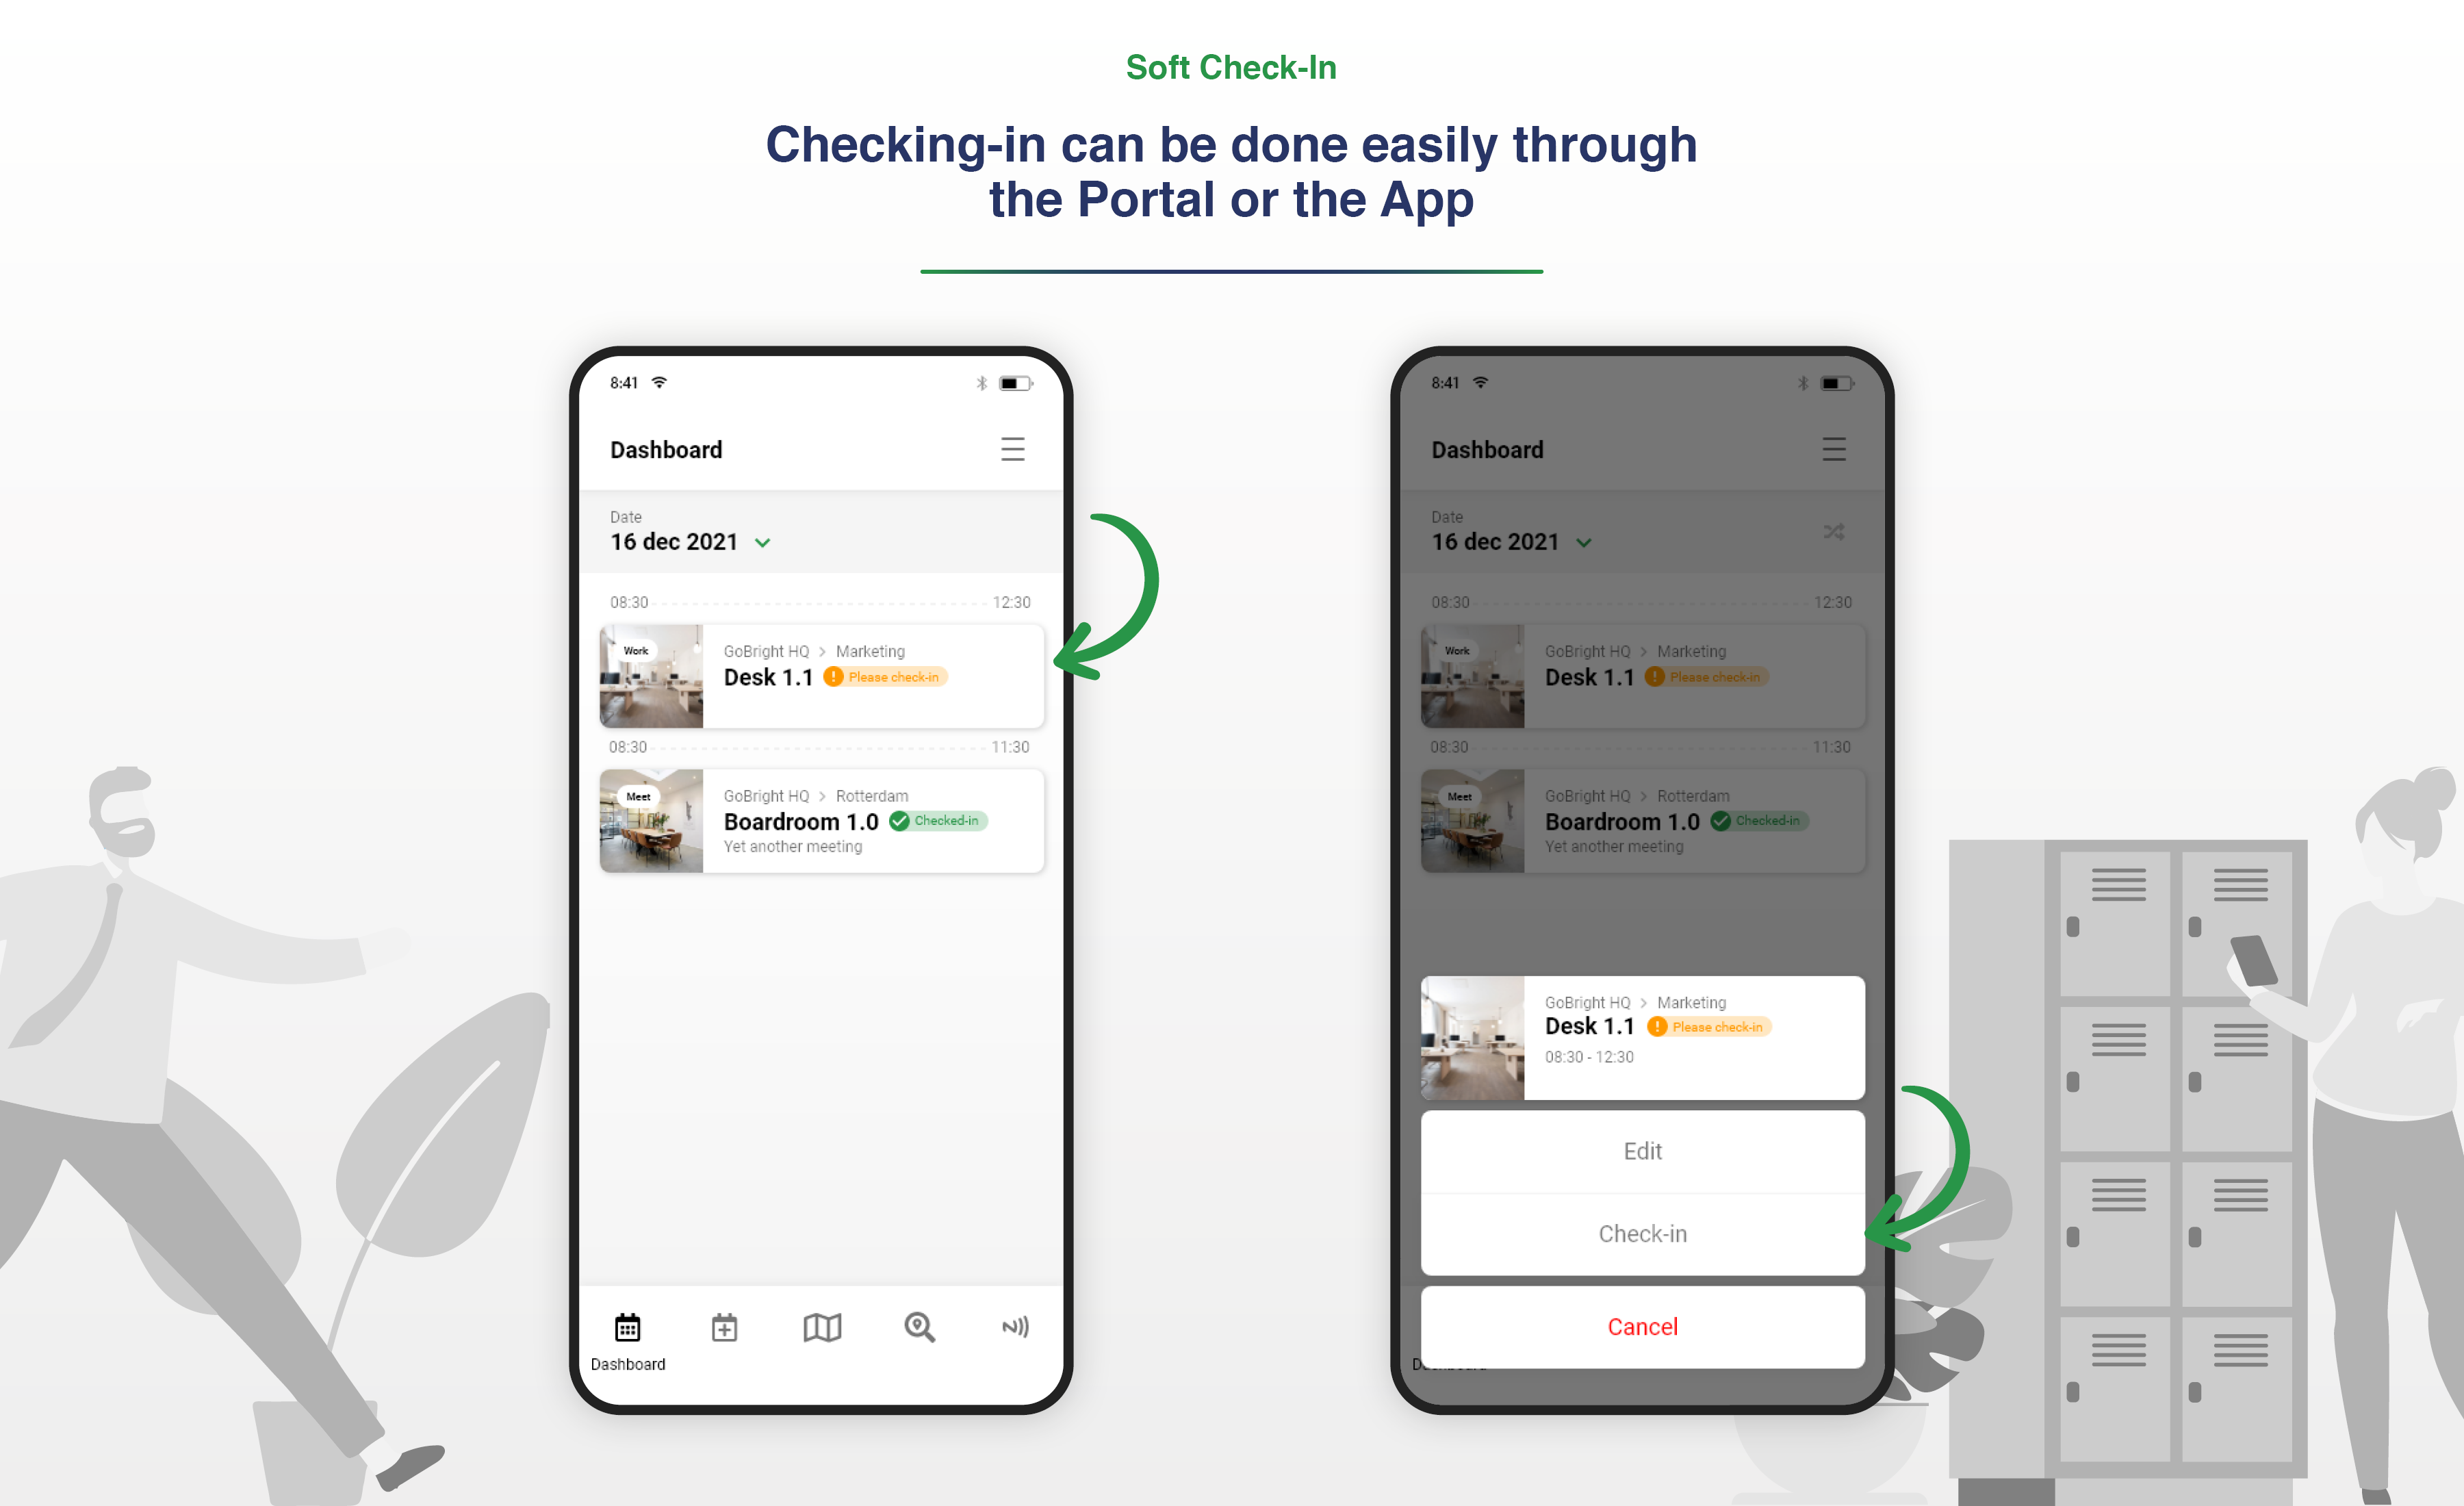 Soft Check-In via App & Portal